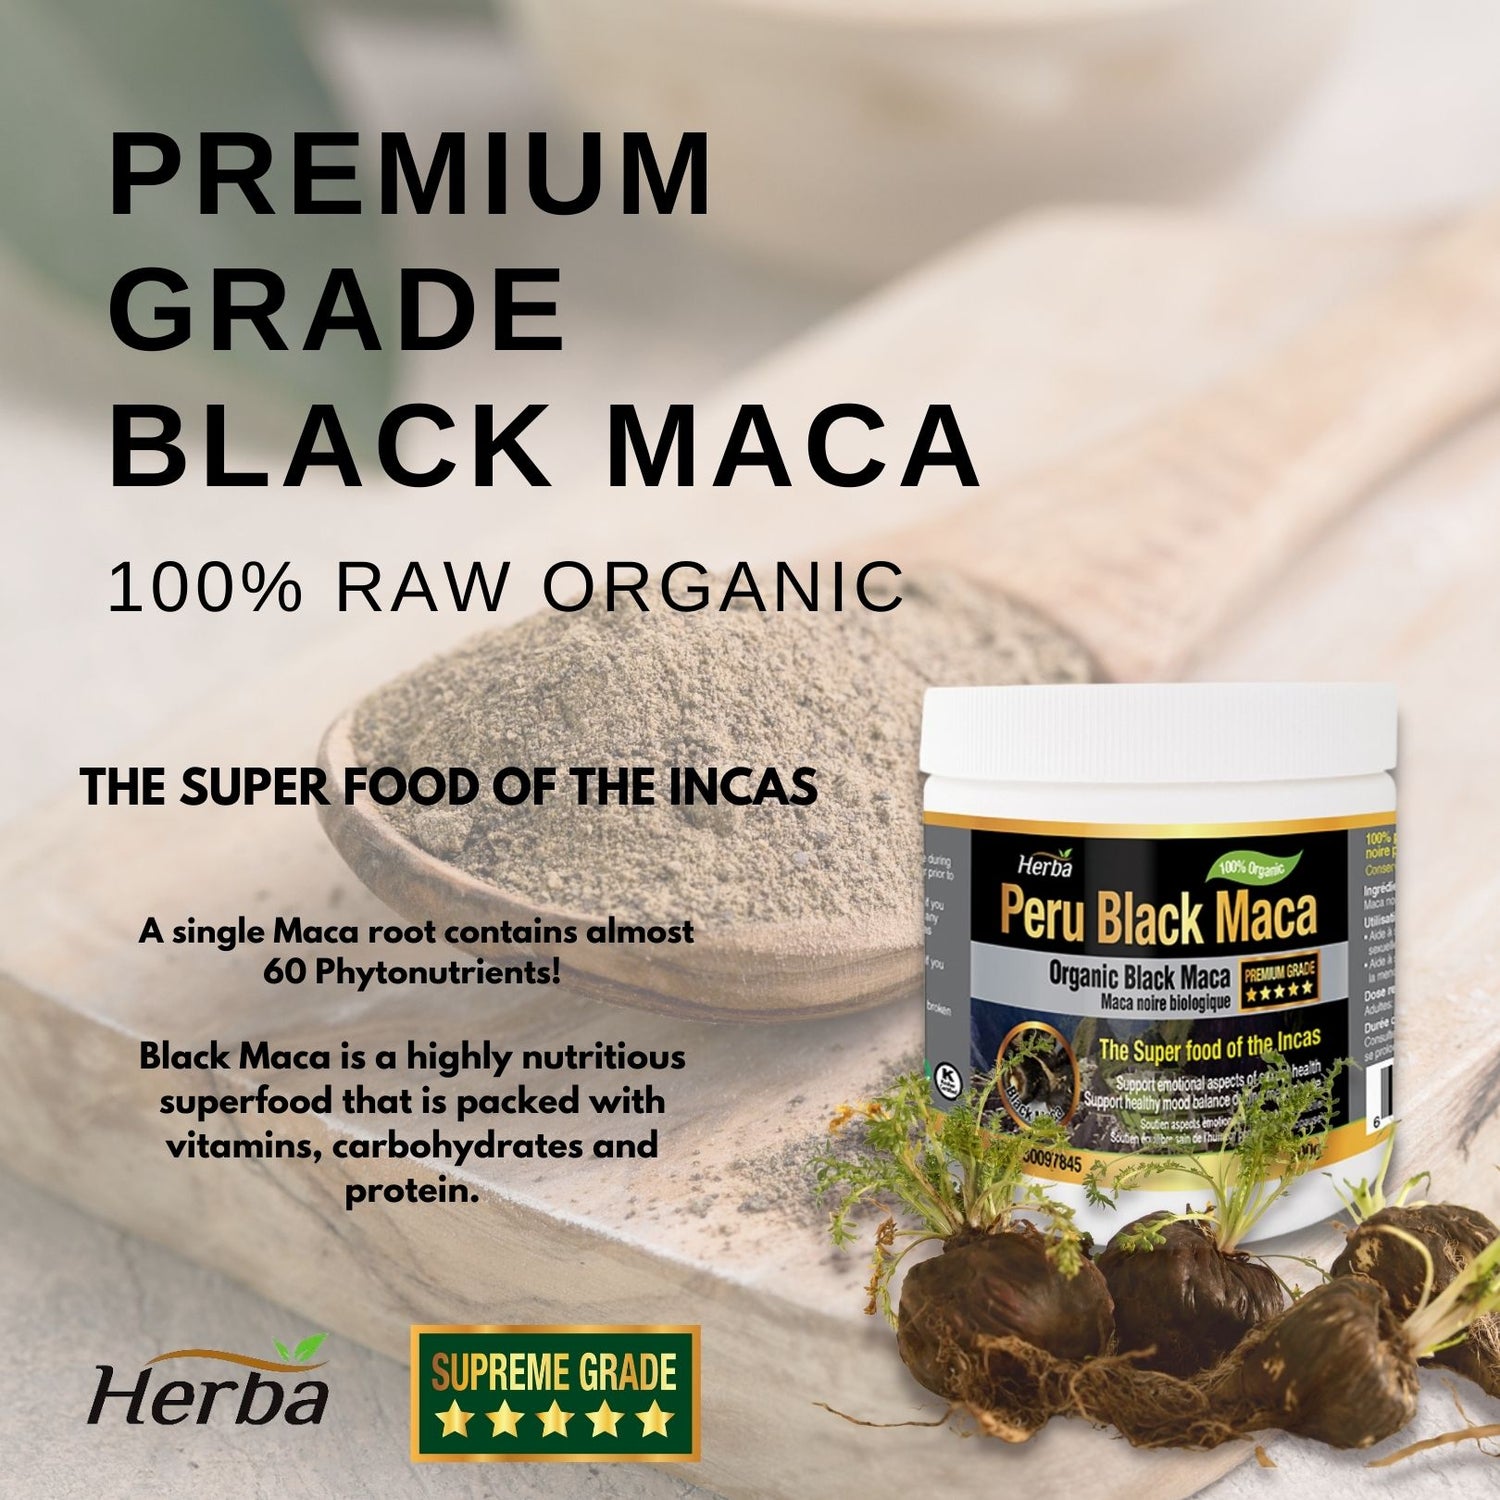 Herba Organic Peru Black Maca Powder - 200g